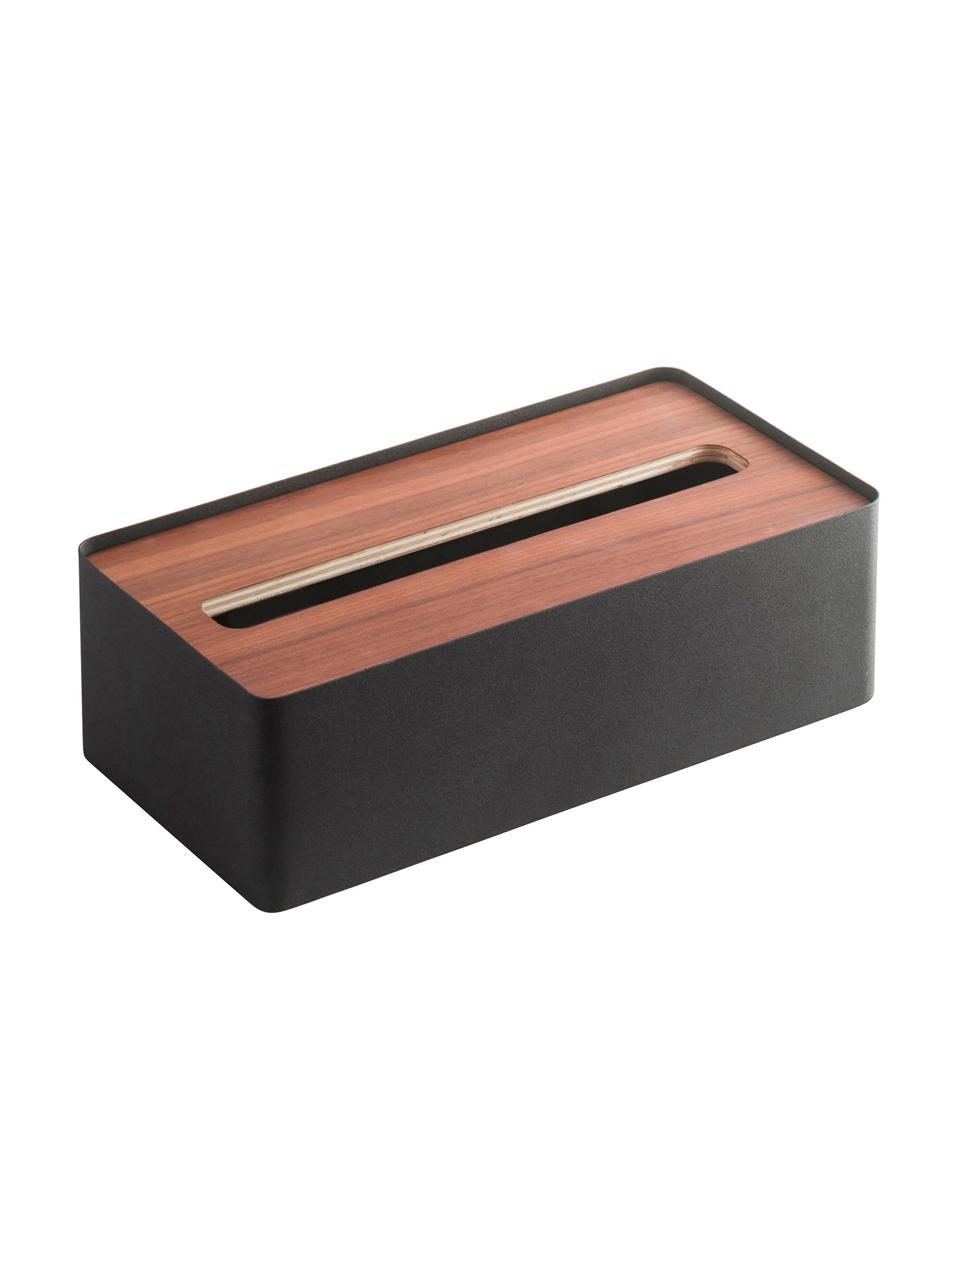 Kosmetiktuchbox Rin mit abnehmbaren Bambus-Deckel, Deckel: Holz, Box: Stahl, lackiert, Schwarz, Dunkelbraun, B 26 x H 8 cm